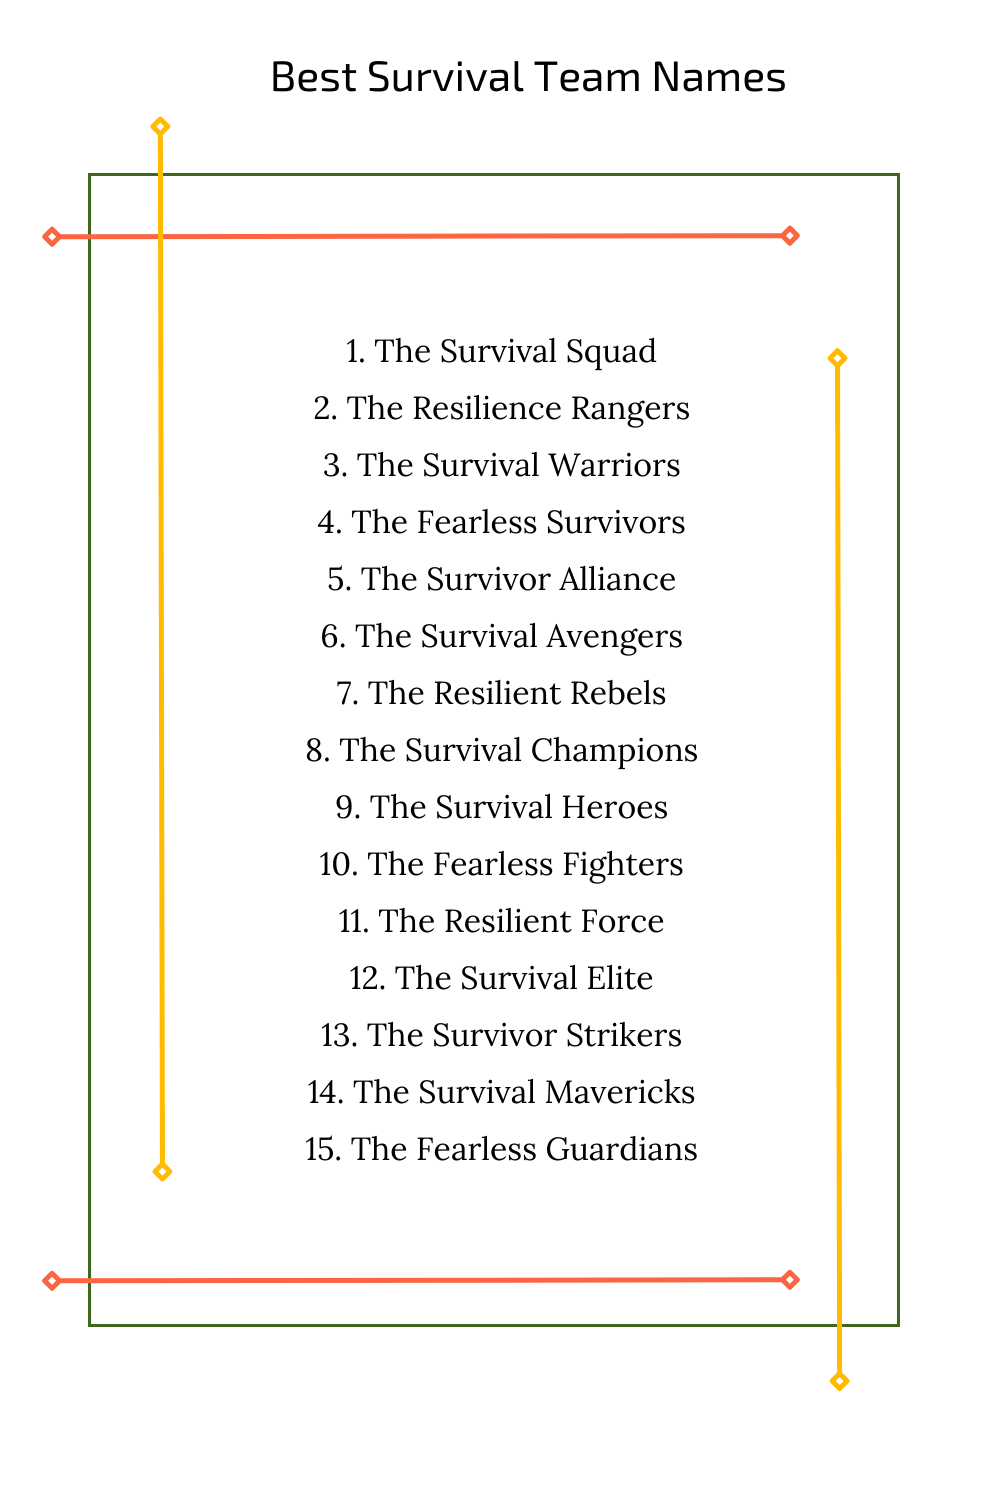 Best Survival Team Names